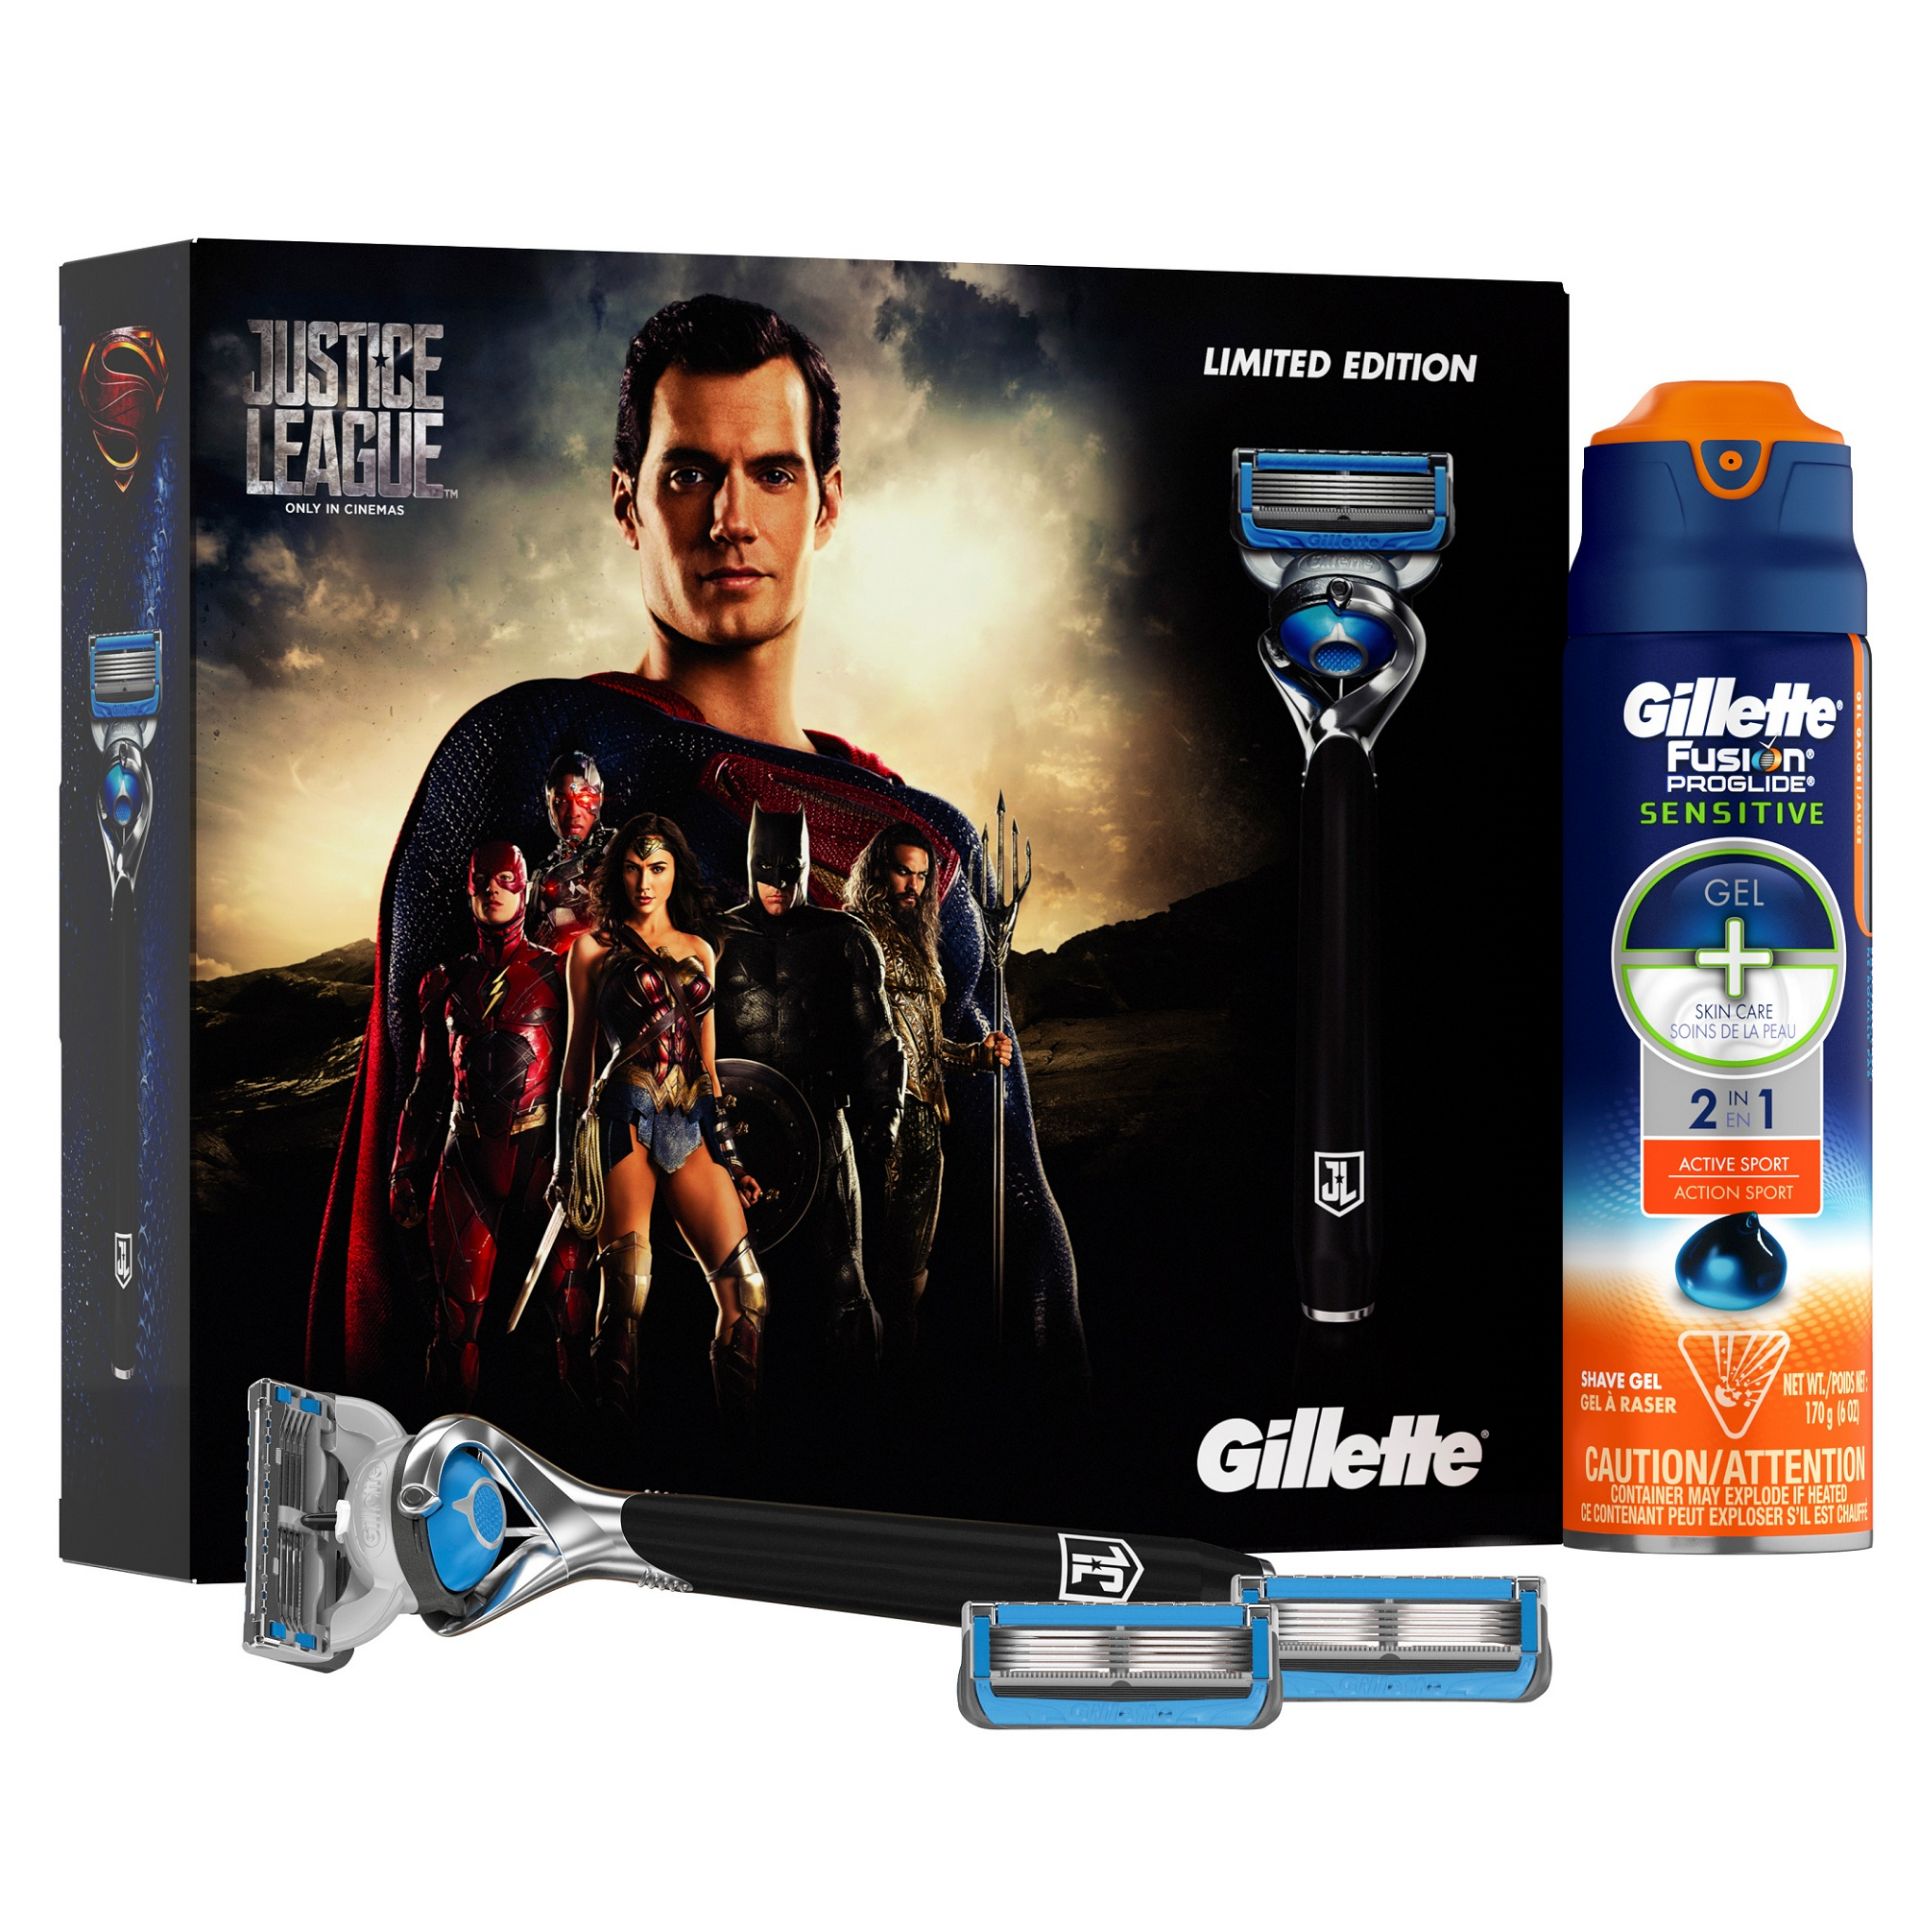 V Brand New Gillette Limited Edition Justice League Shaving Gift Set Inc 2in1 Shaving Gel -